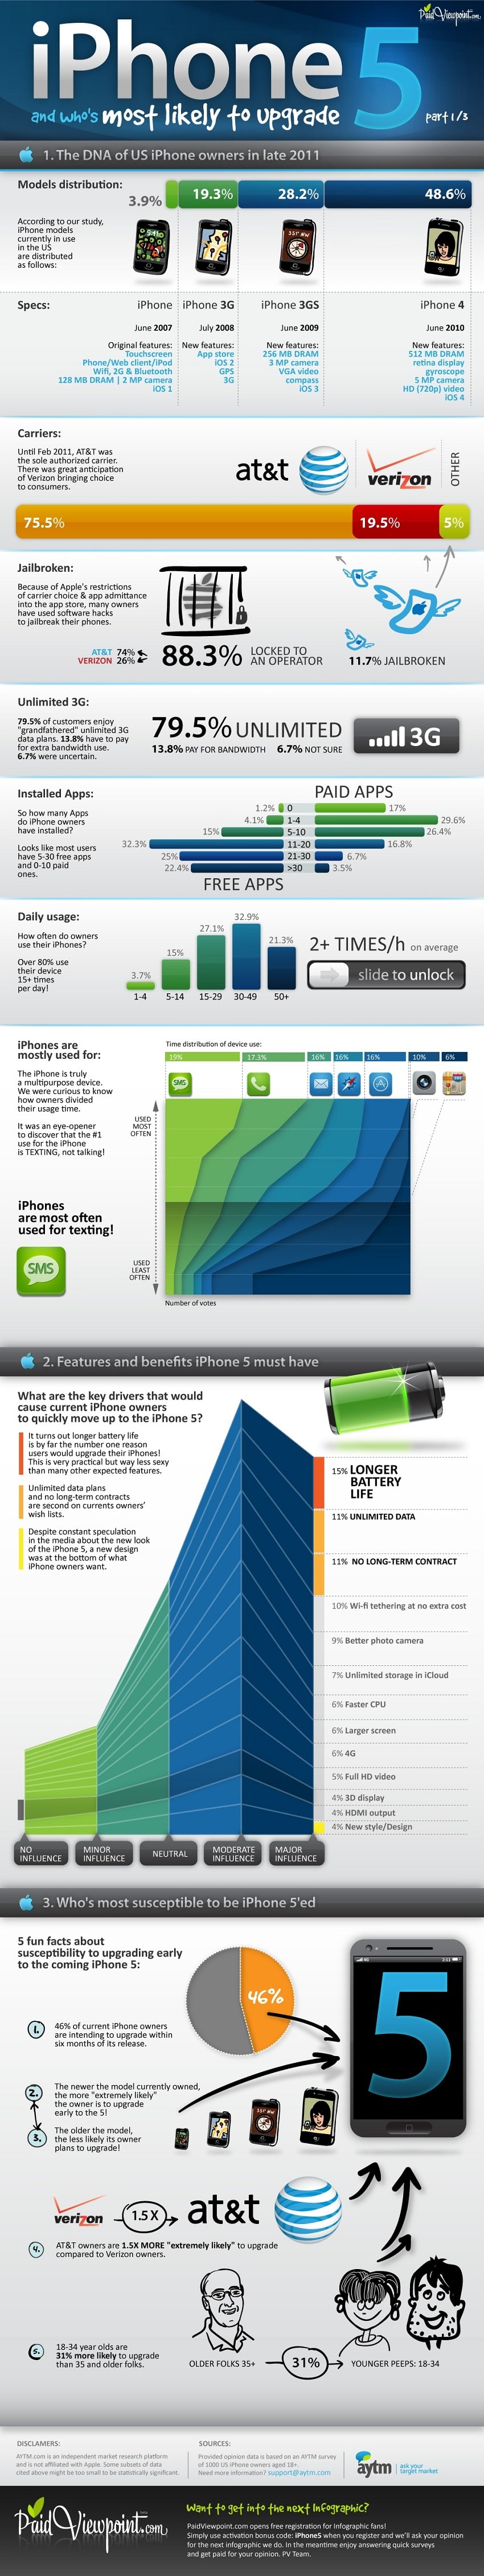 iPhone 5 Expectation Visualization Infographic